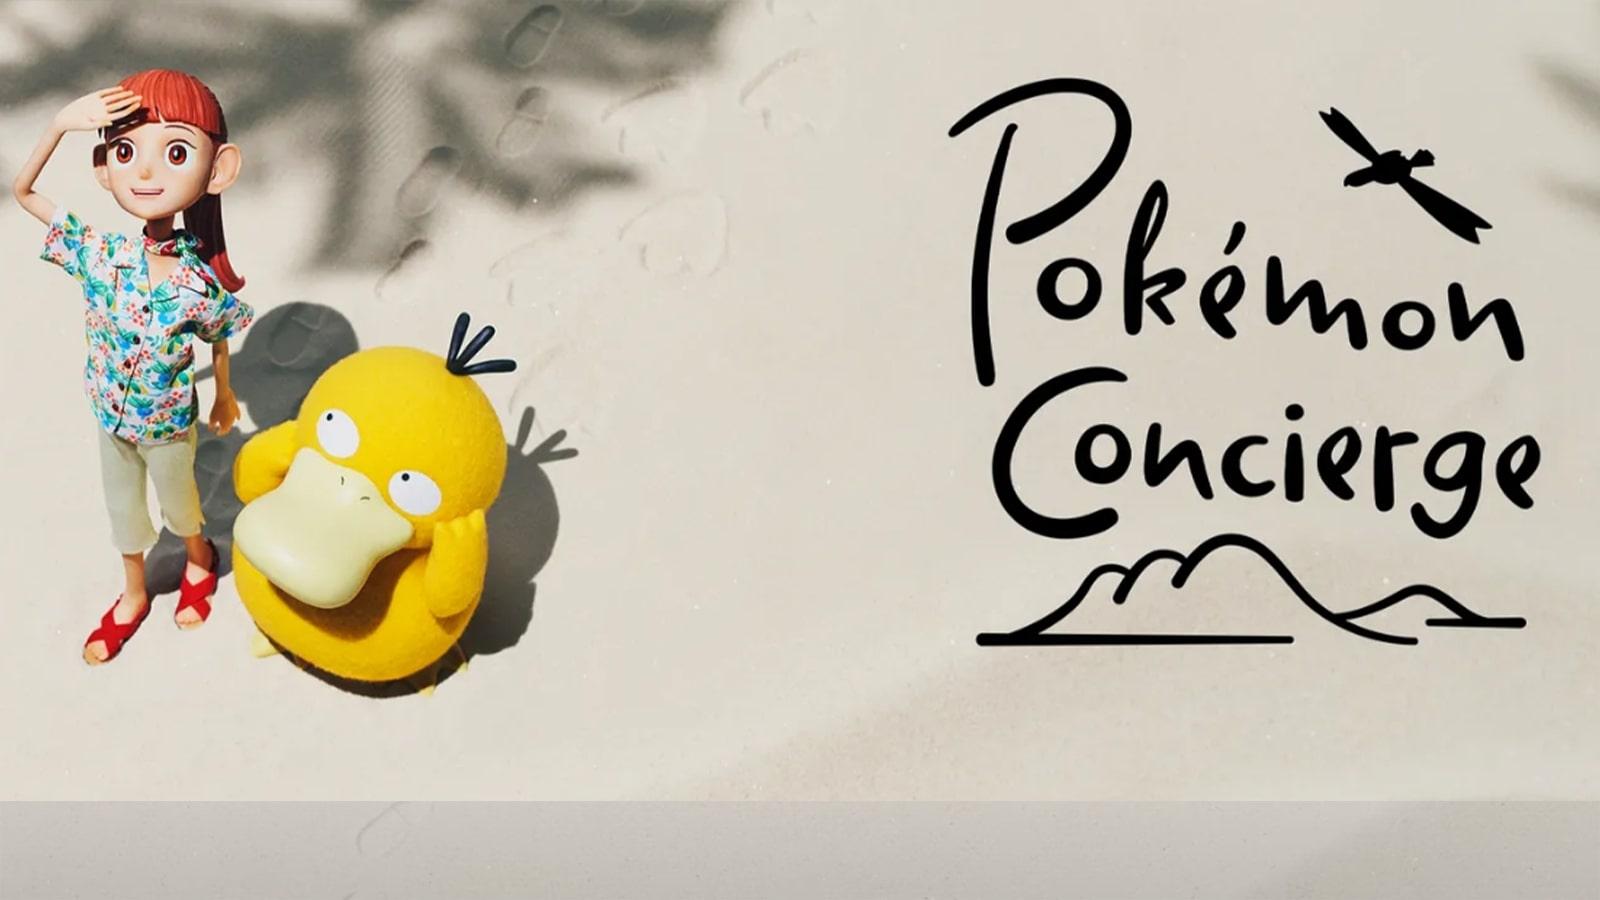 Pokémon reveals new entertainment experiences and updates across the  franchise in latest Pokémon Presents - News - Nintendo Official Site